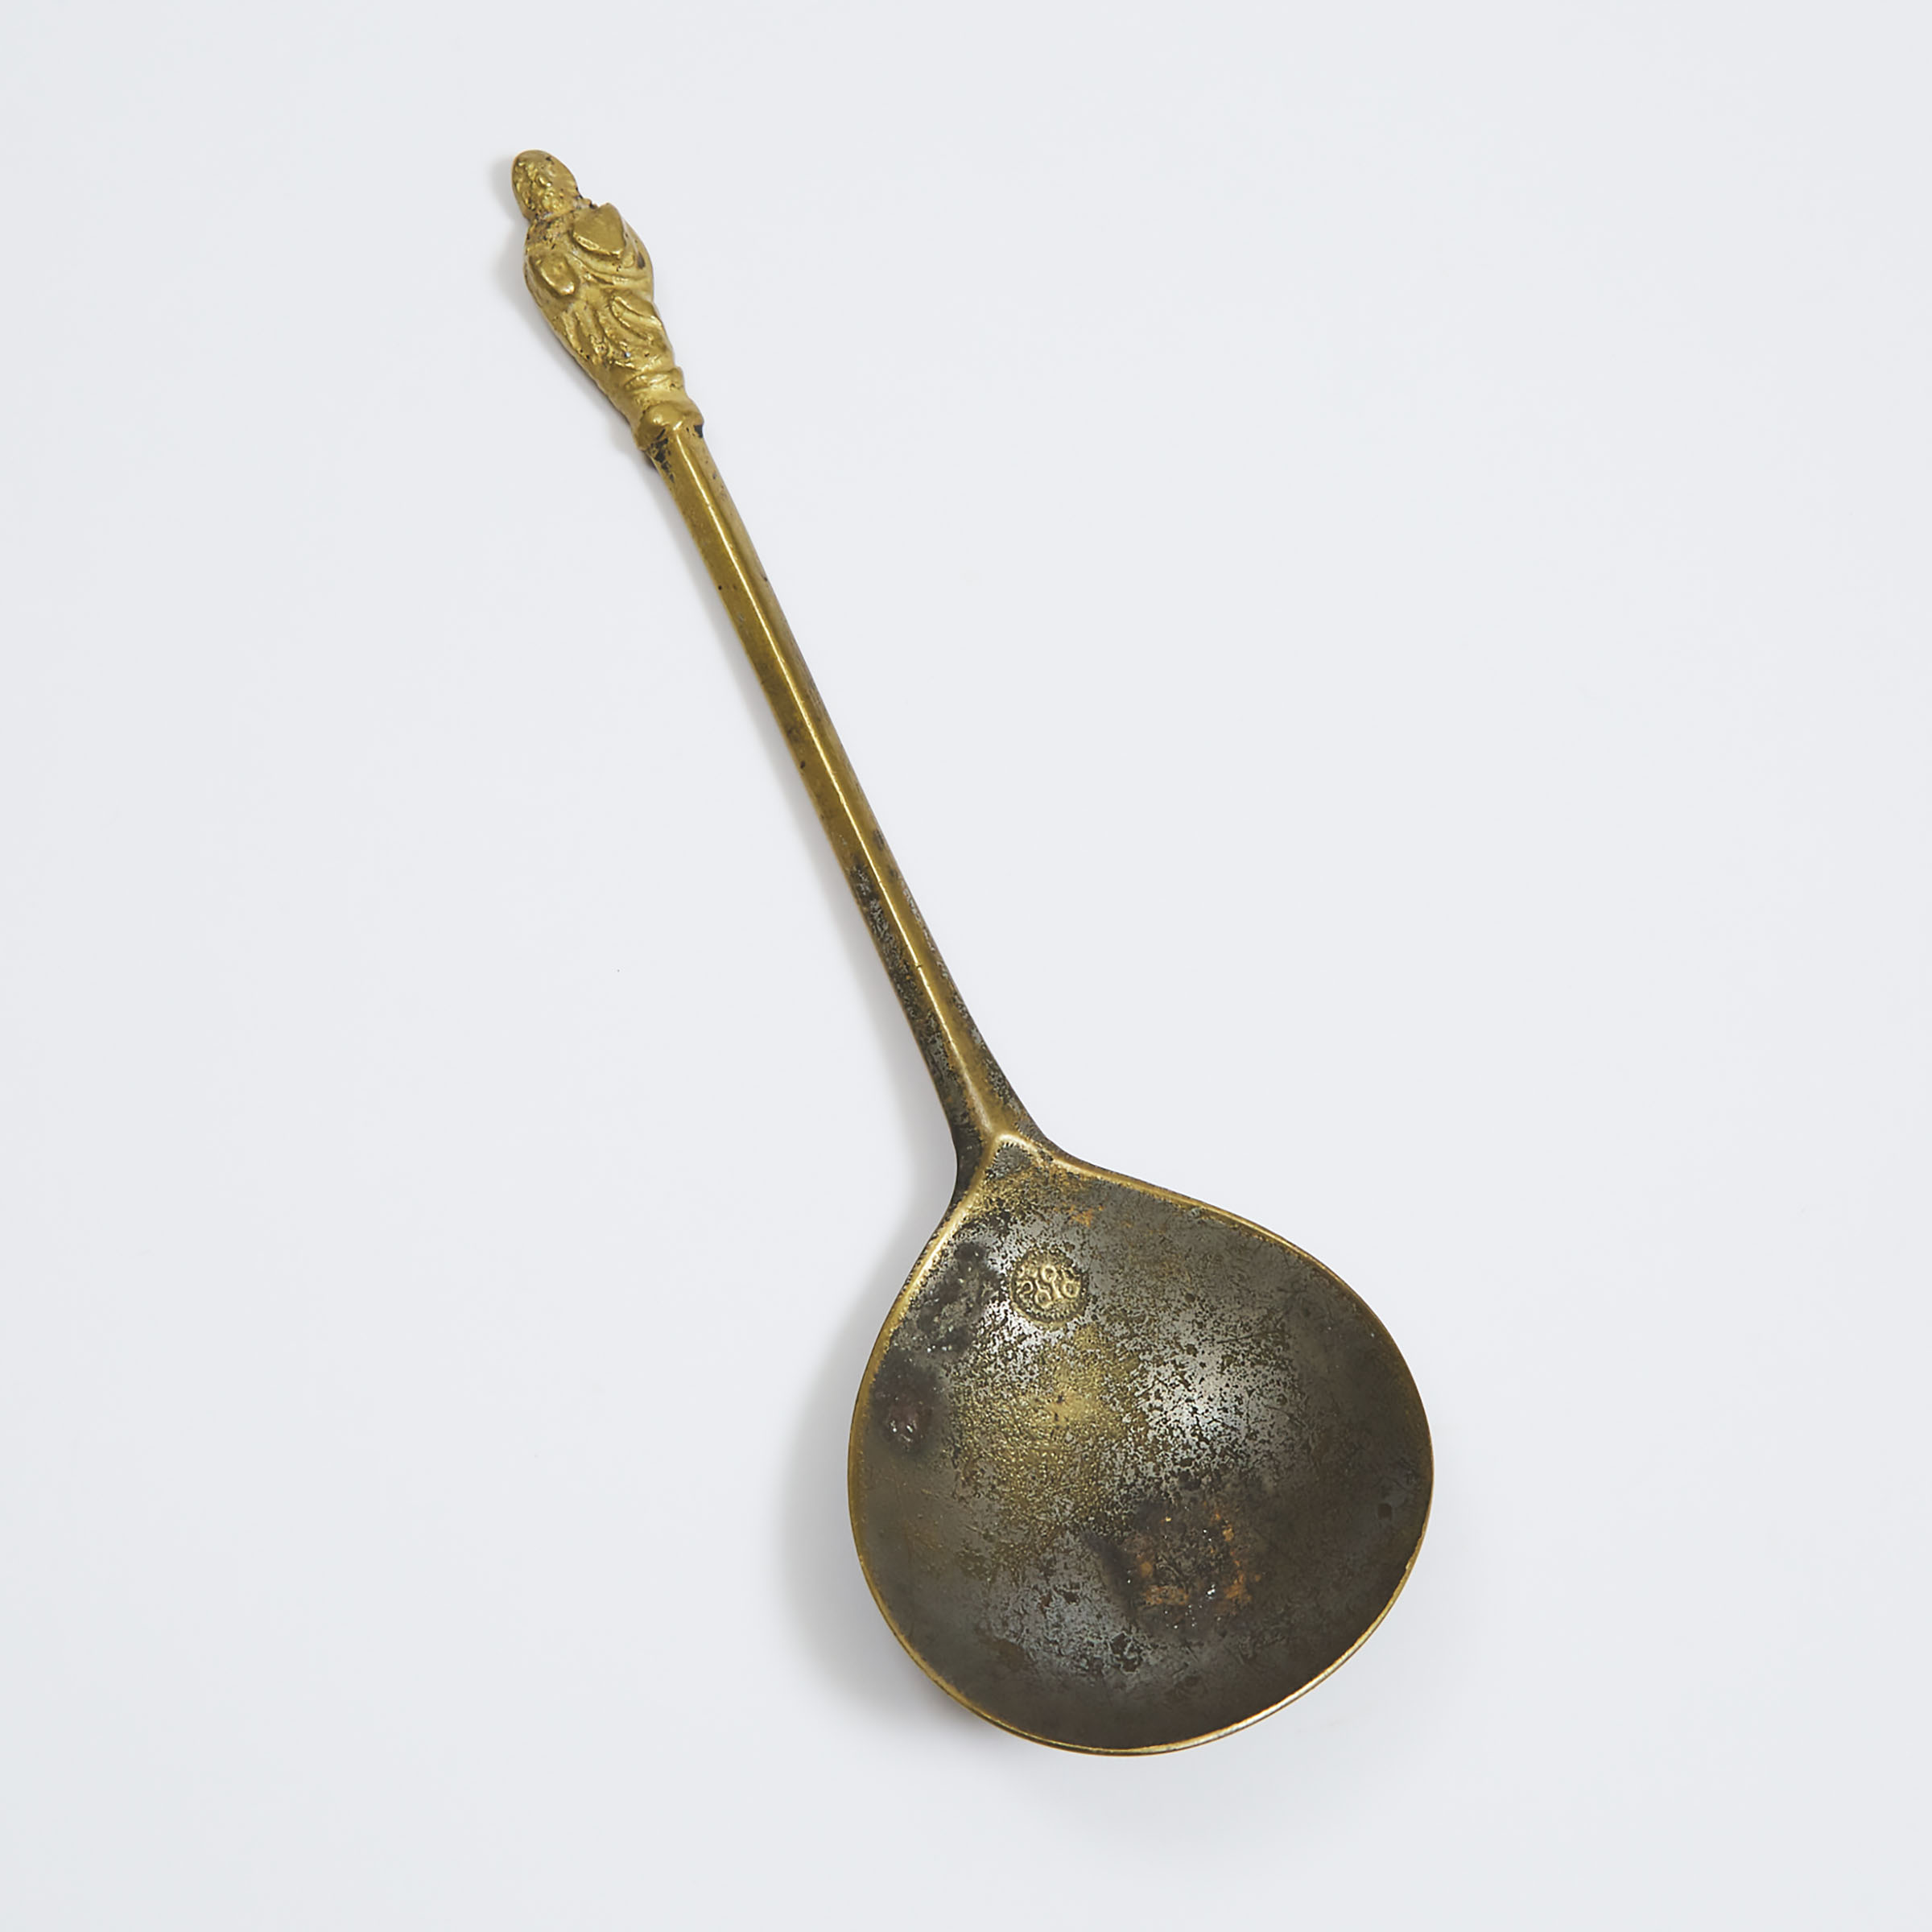 English Latten Apostle Spoon of St. Paul, early 17th century